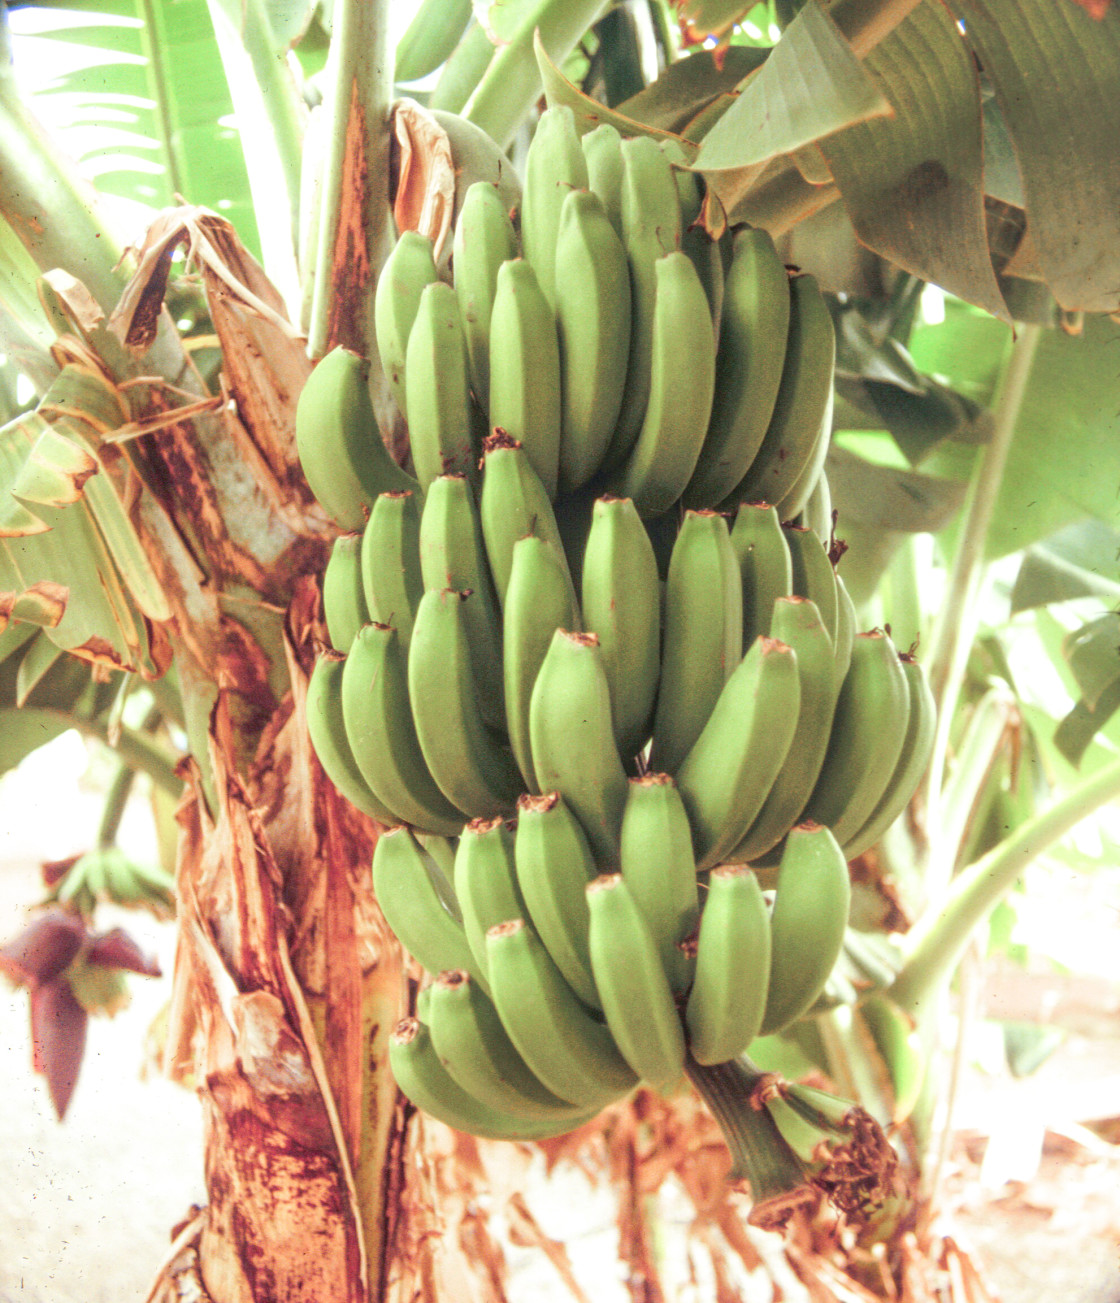 "Bananas on a stalk" stock image